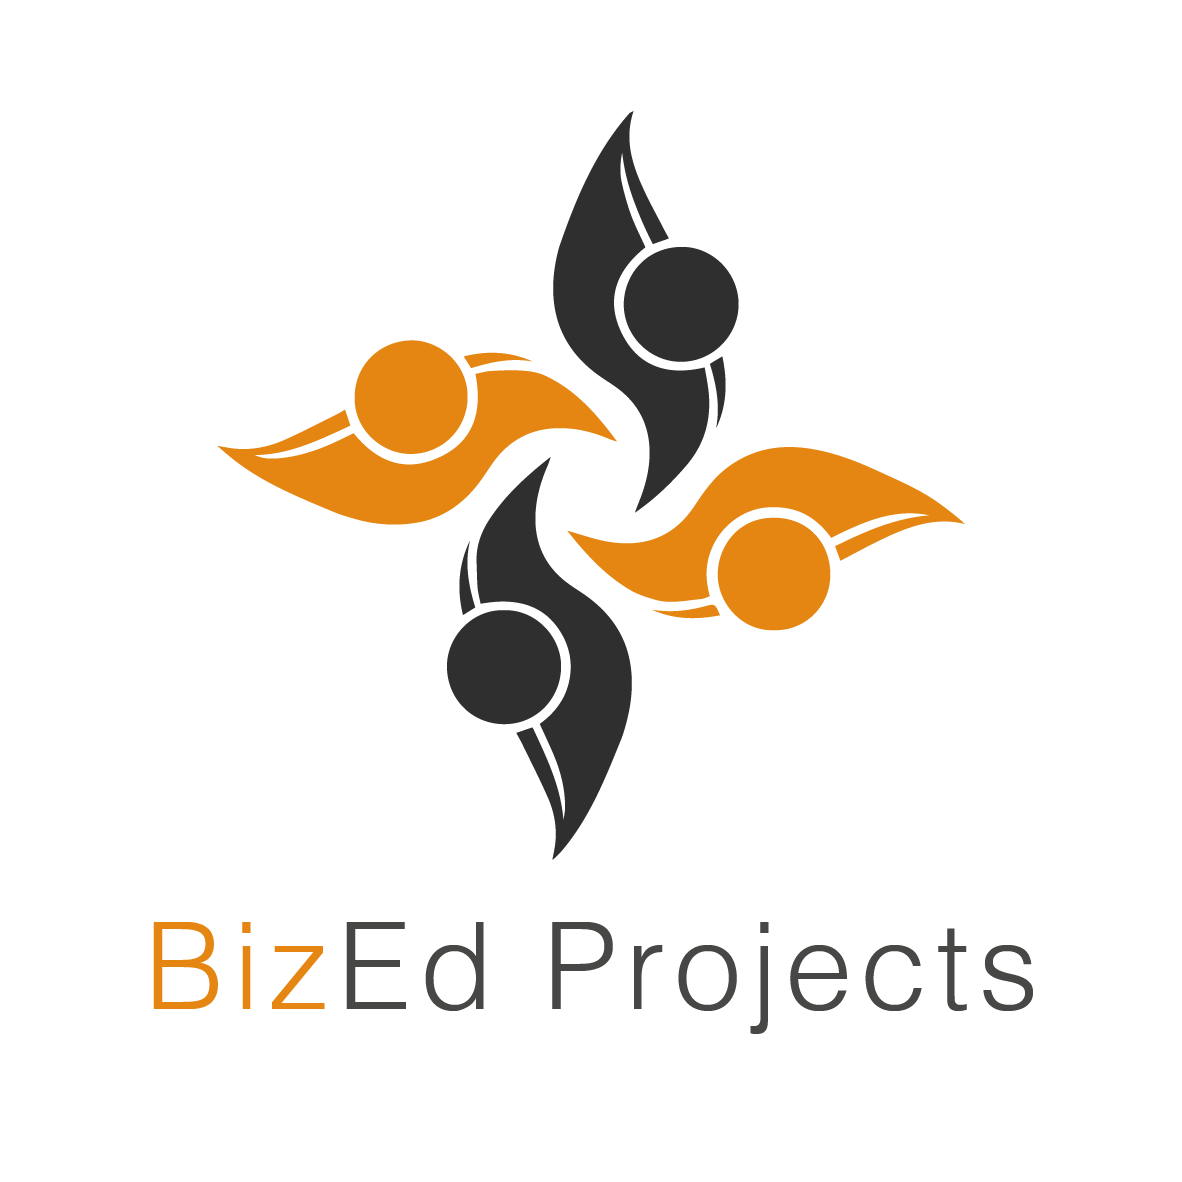 bized logo